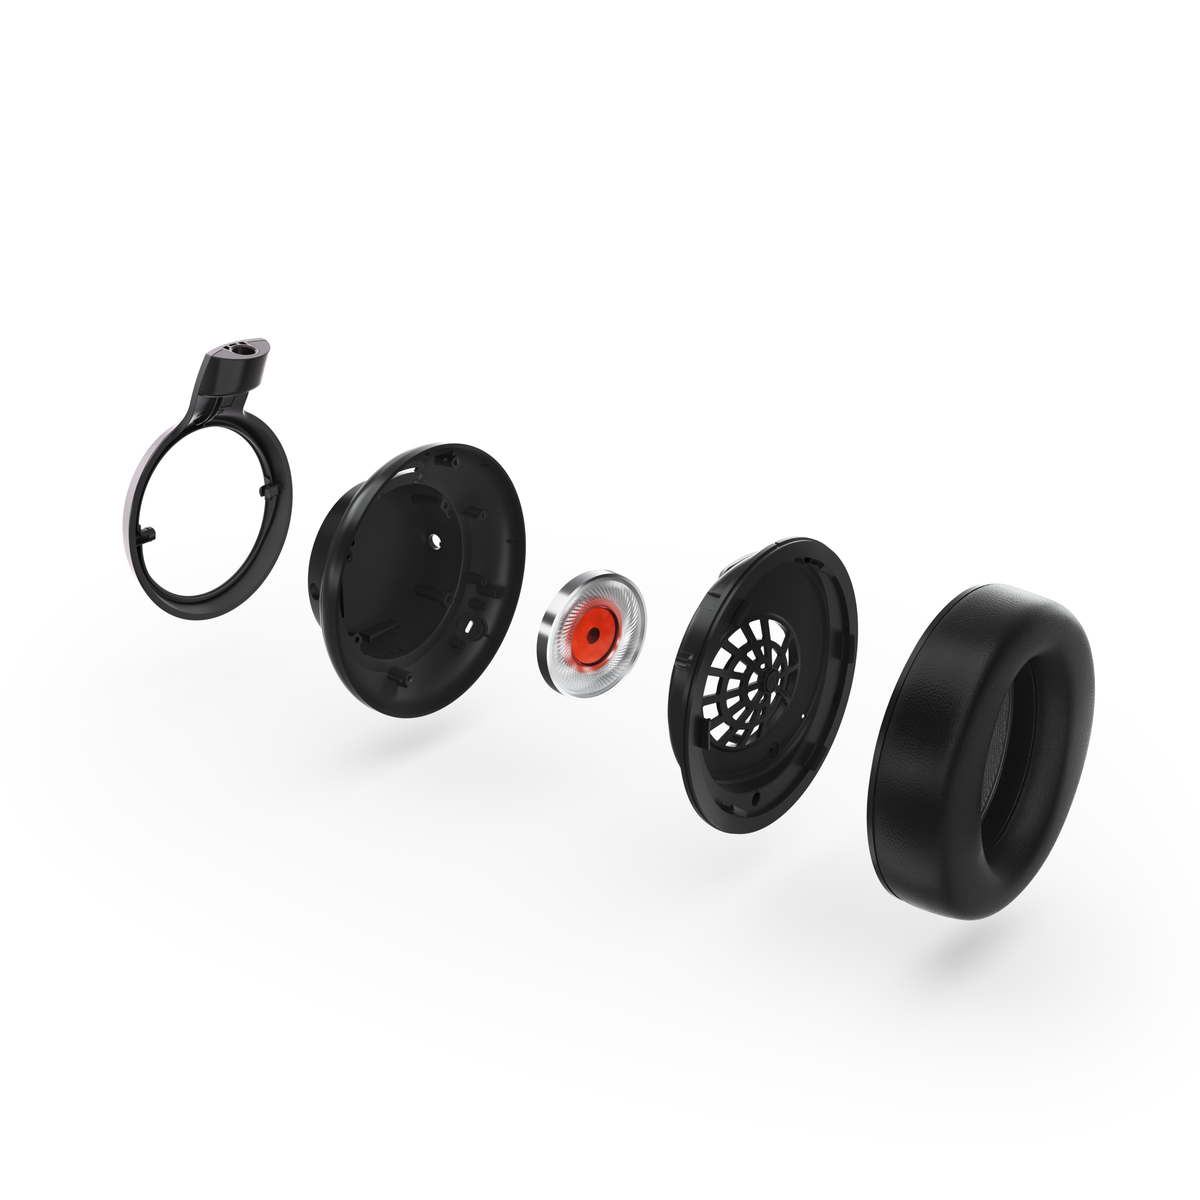 PHILIPS H9505BK/00, Over-ear Kopfhörer Schwarz Bluetooth